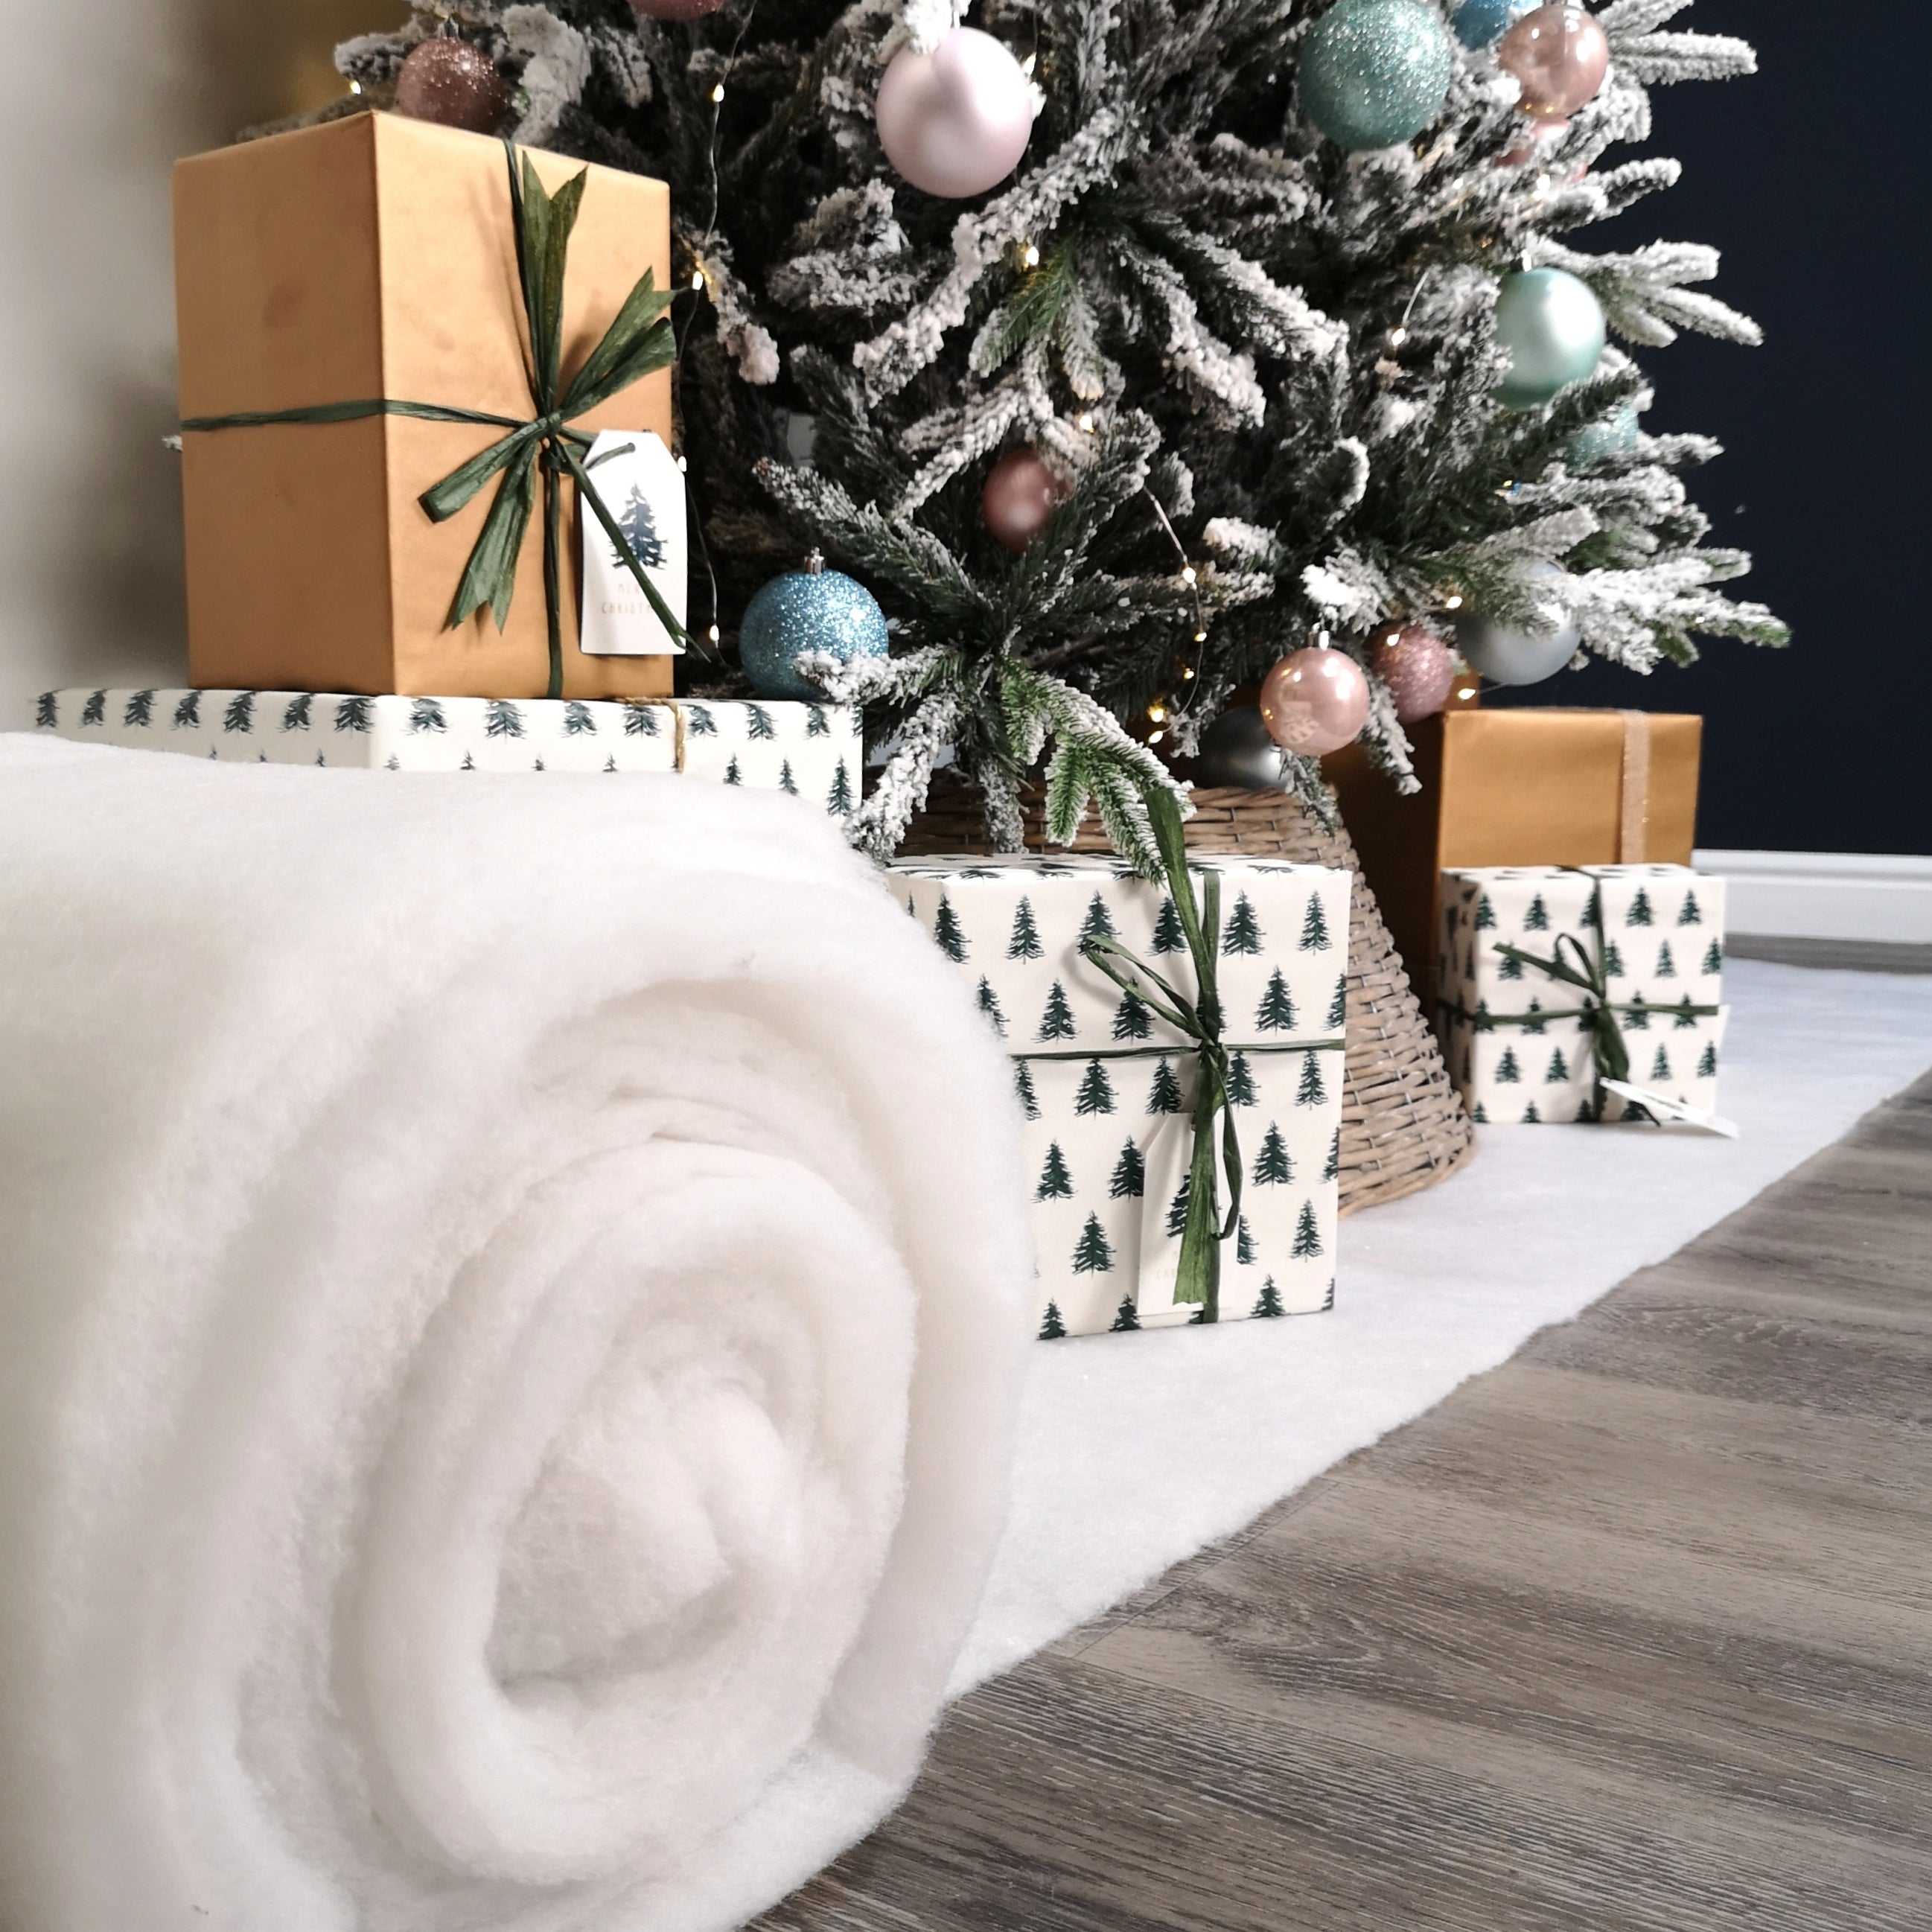 13.5m (44ft) x 90cm Soft White Artificial Fake Snow Blanket Christmas Decoration